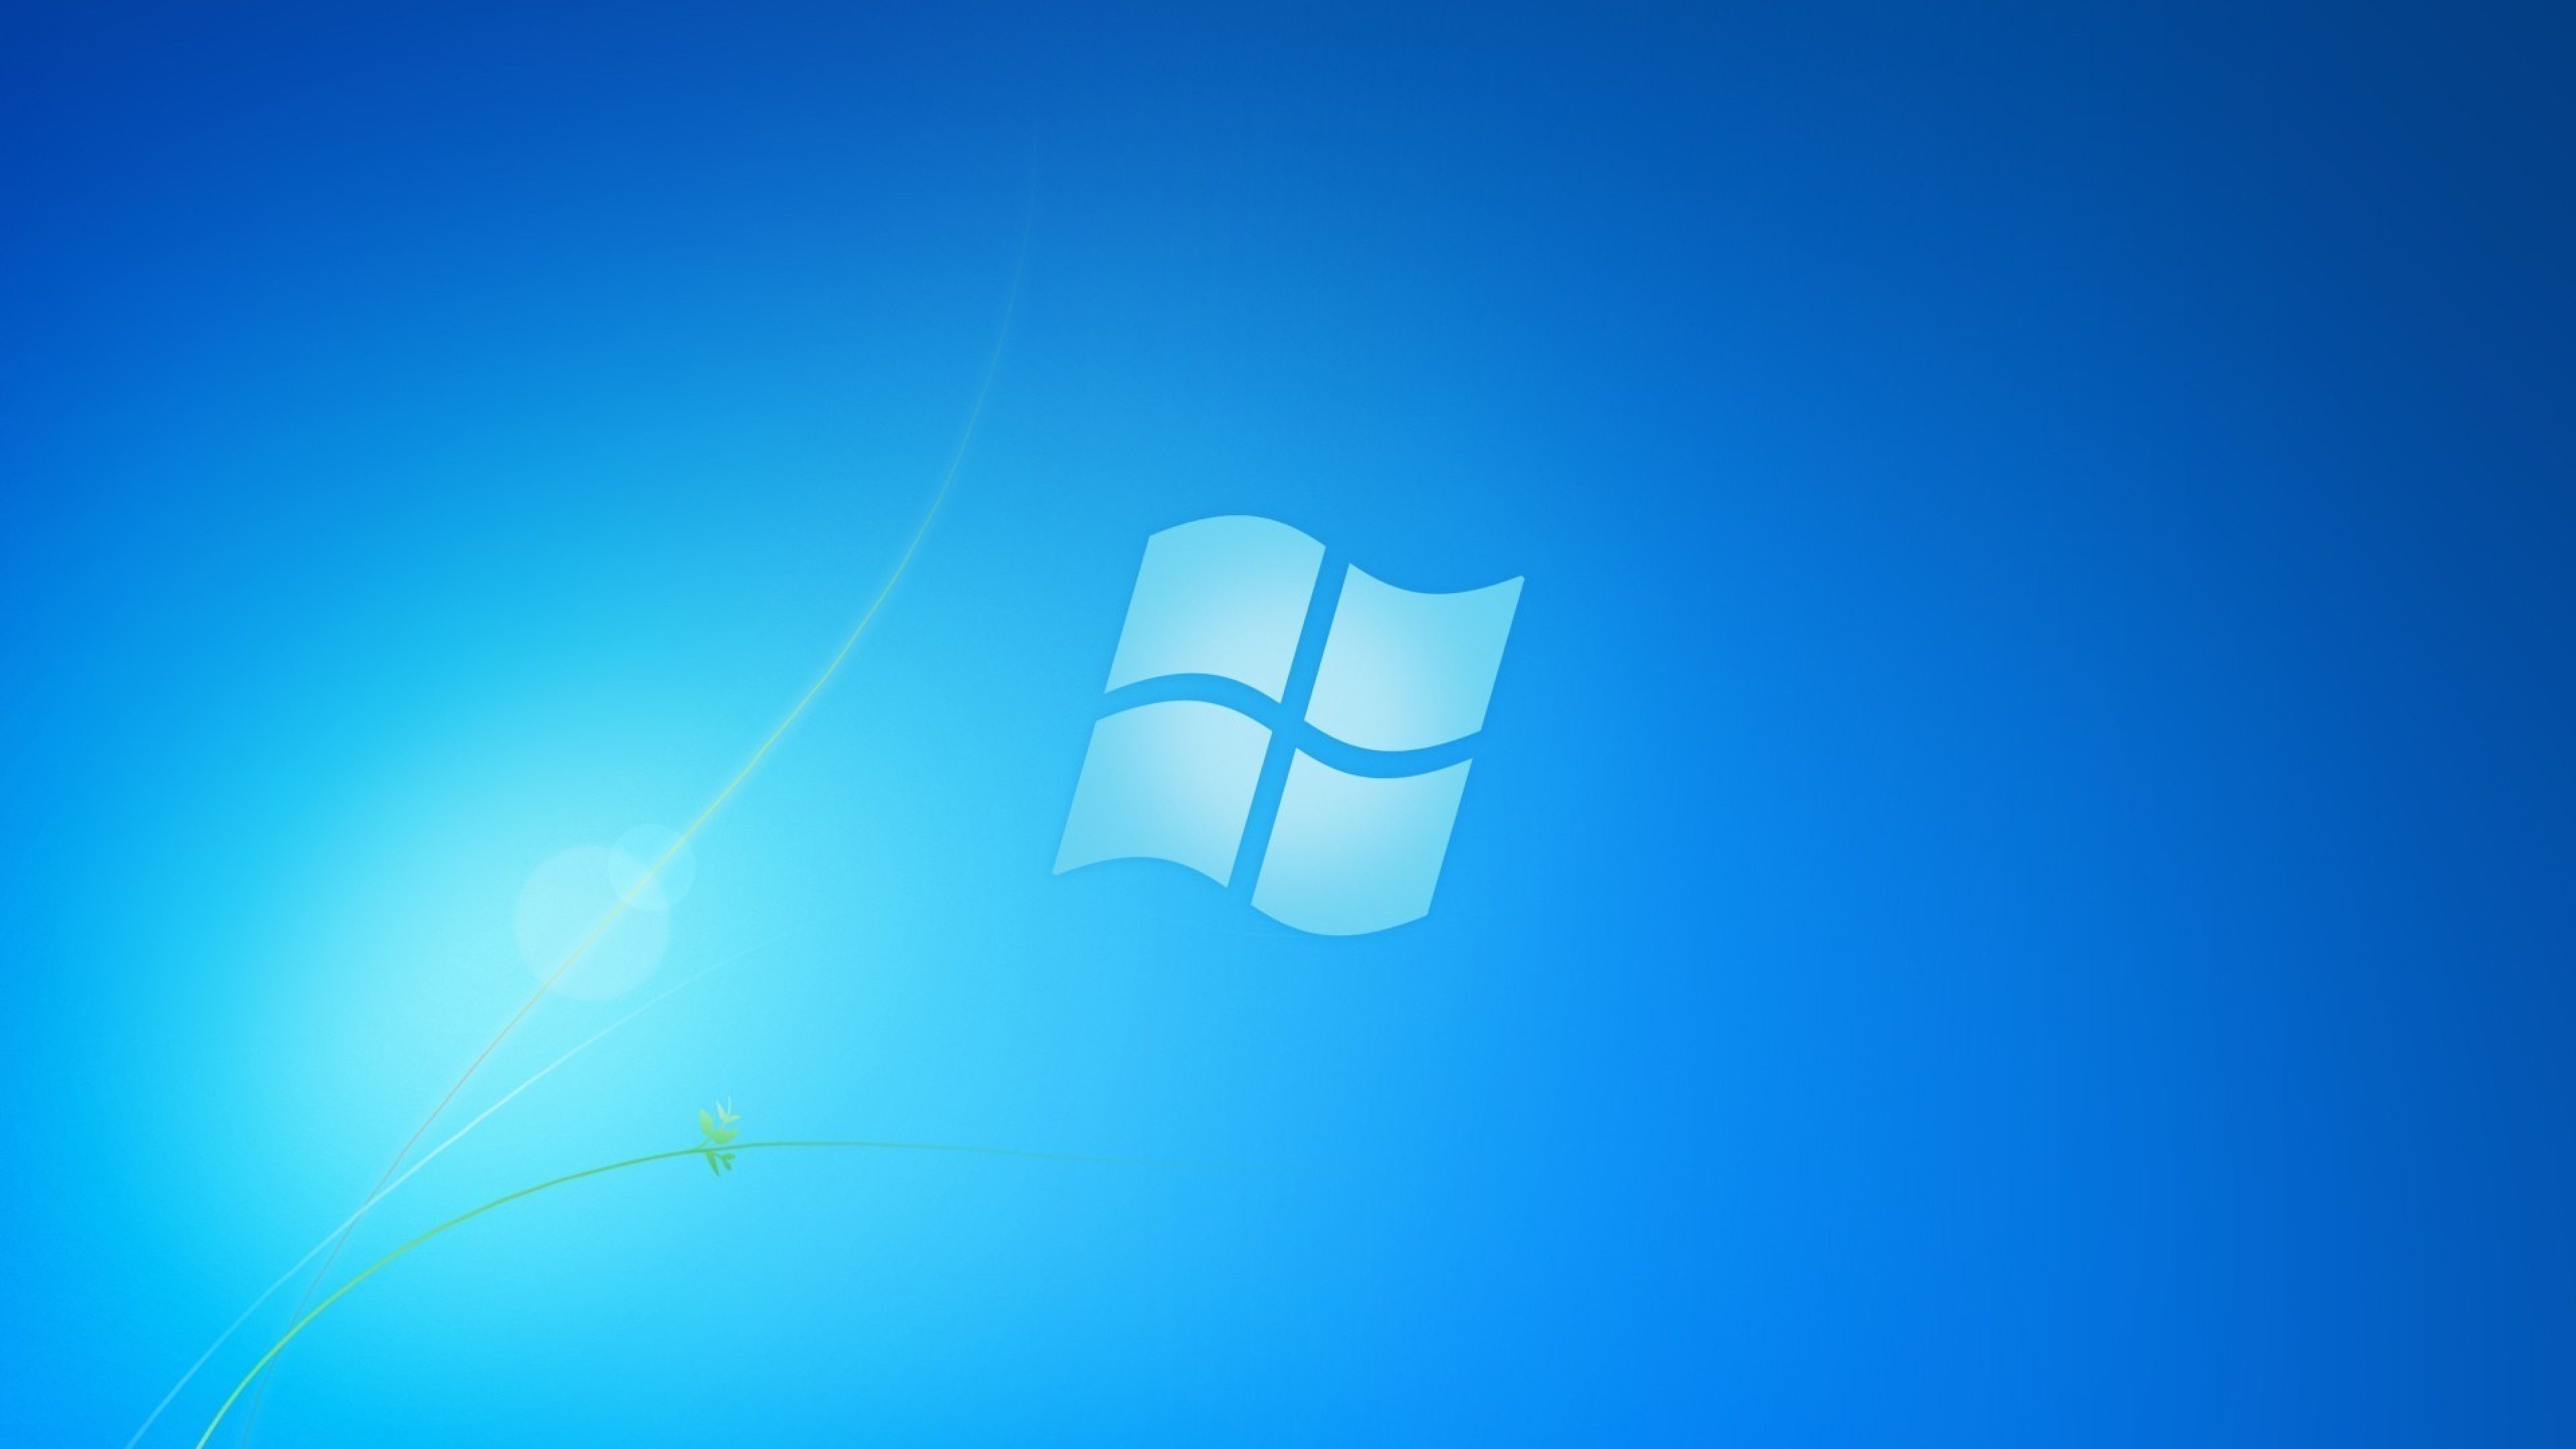 Light Blue Windows 10 Wallpaper 10 logo UHD 3840x2160 Wallpaper